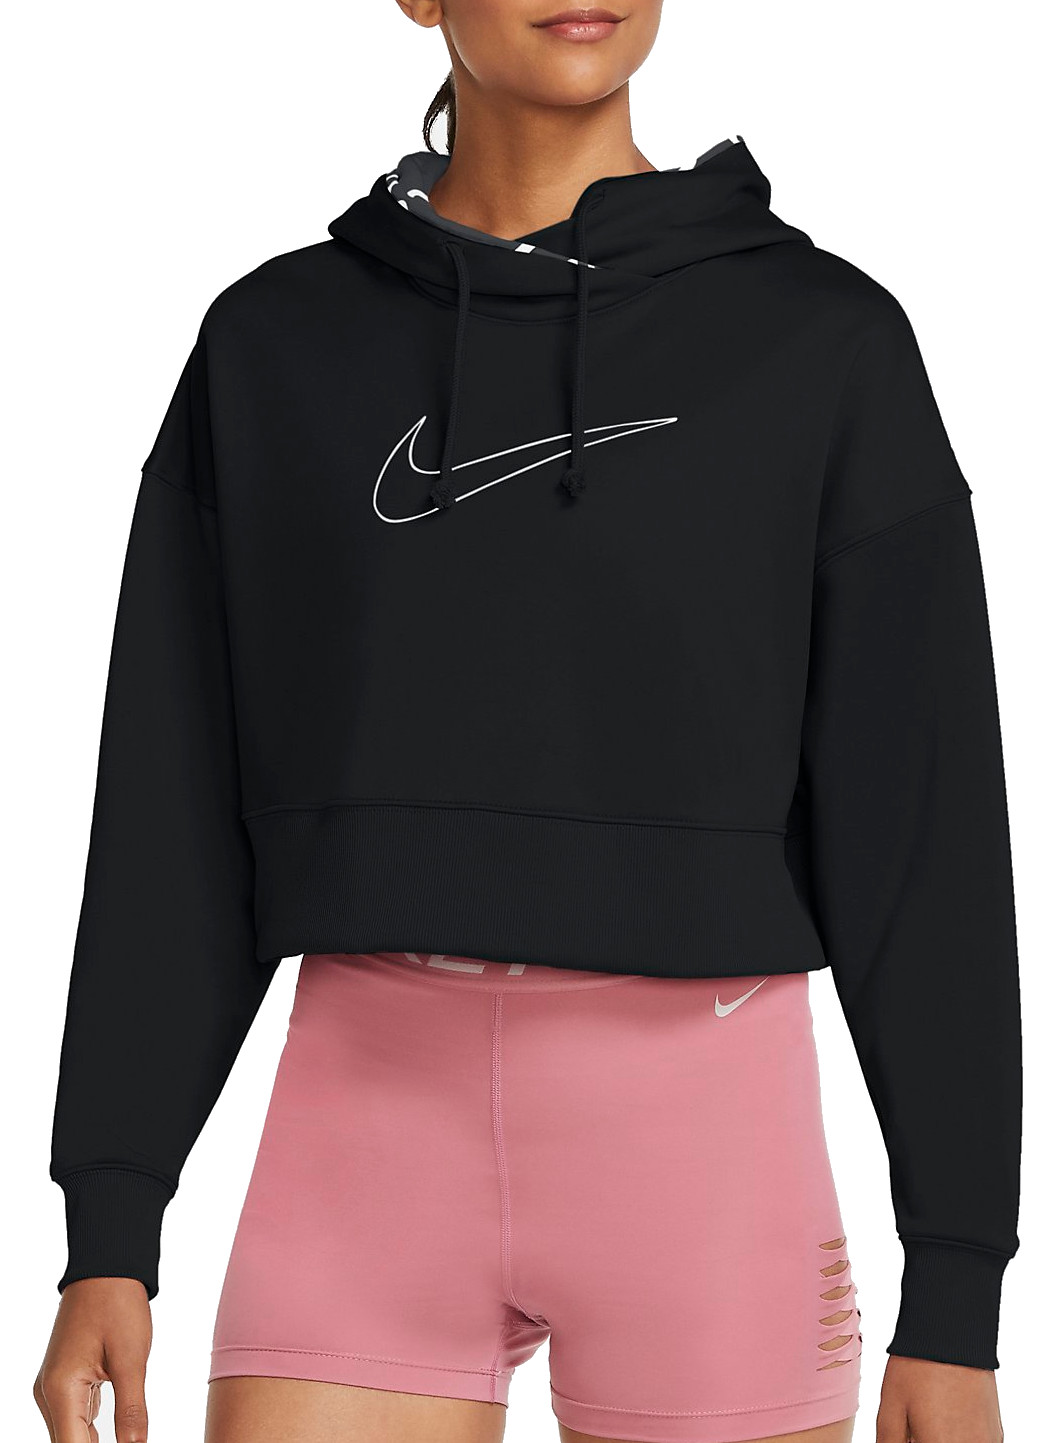 Sweatshirt com capuz Nike Thermo Crop